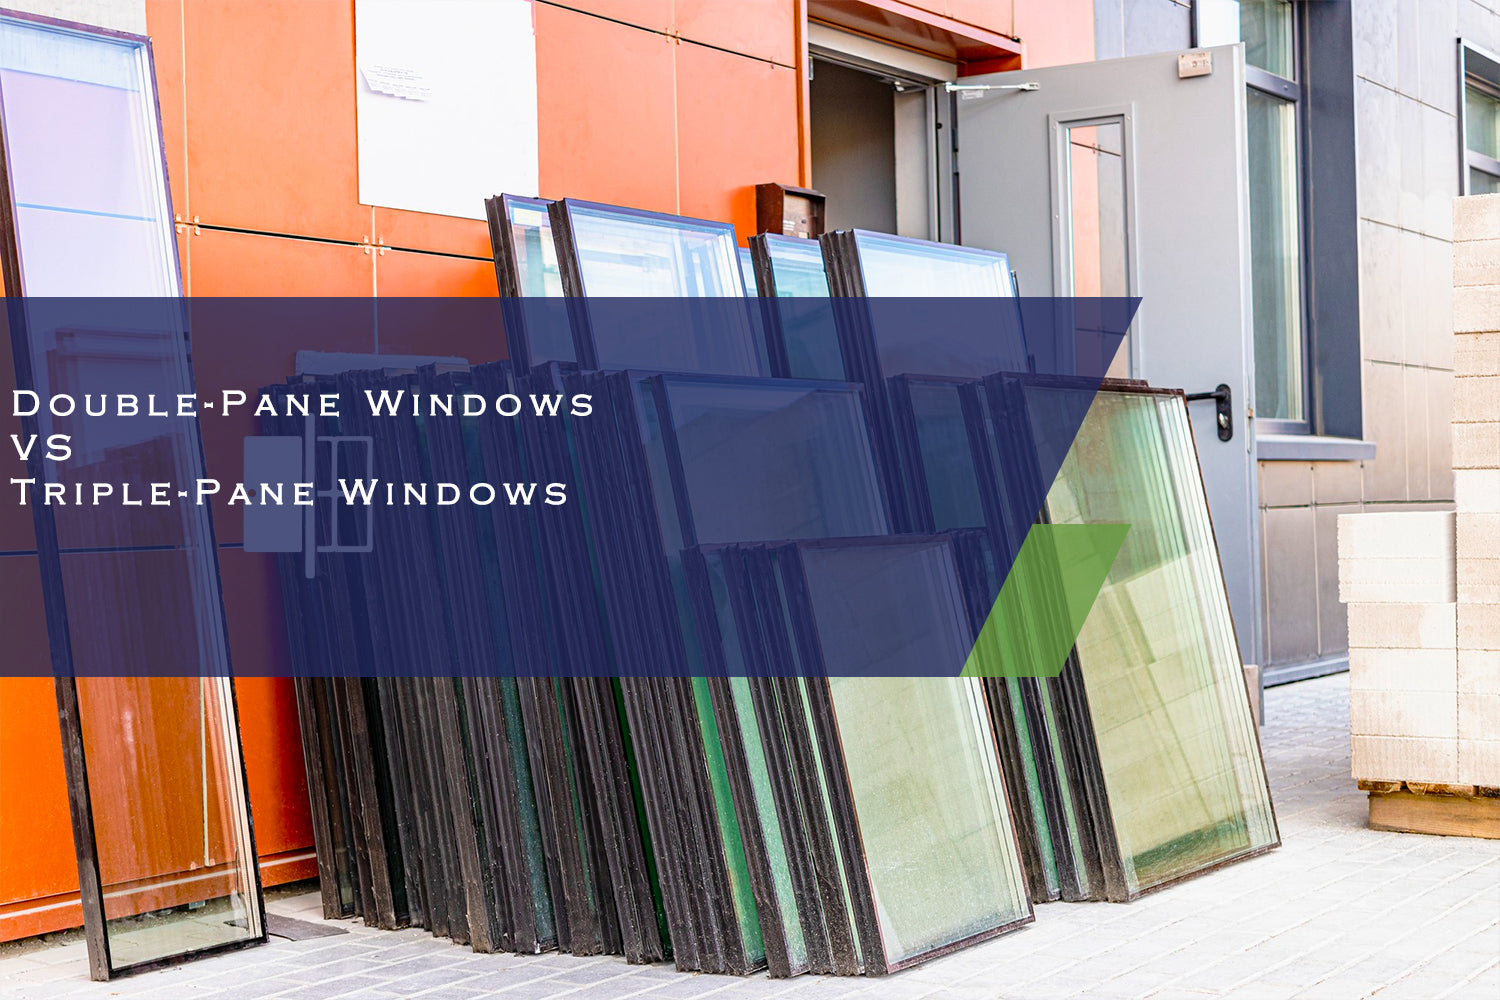 Double-Pane Windows VS Triple-Pane Windows